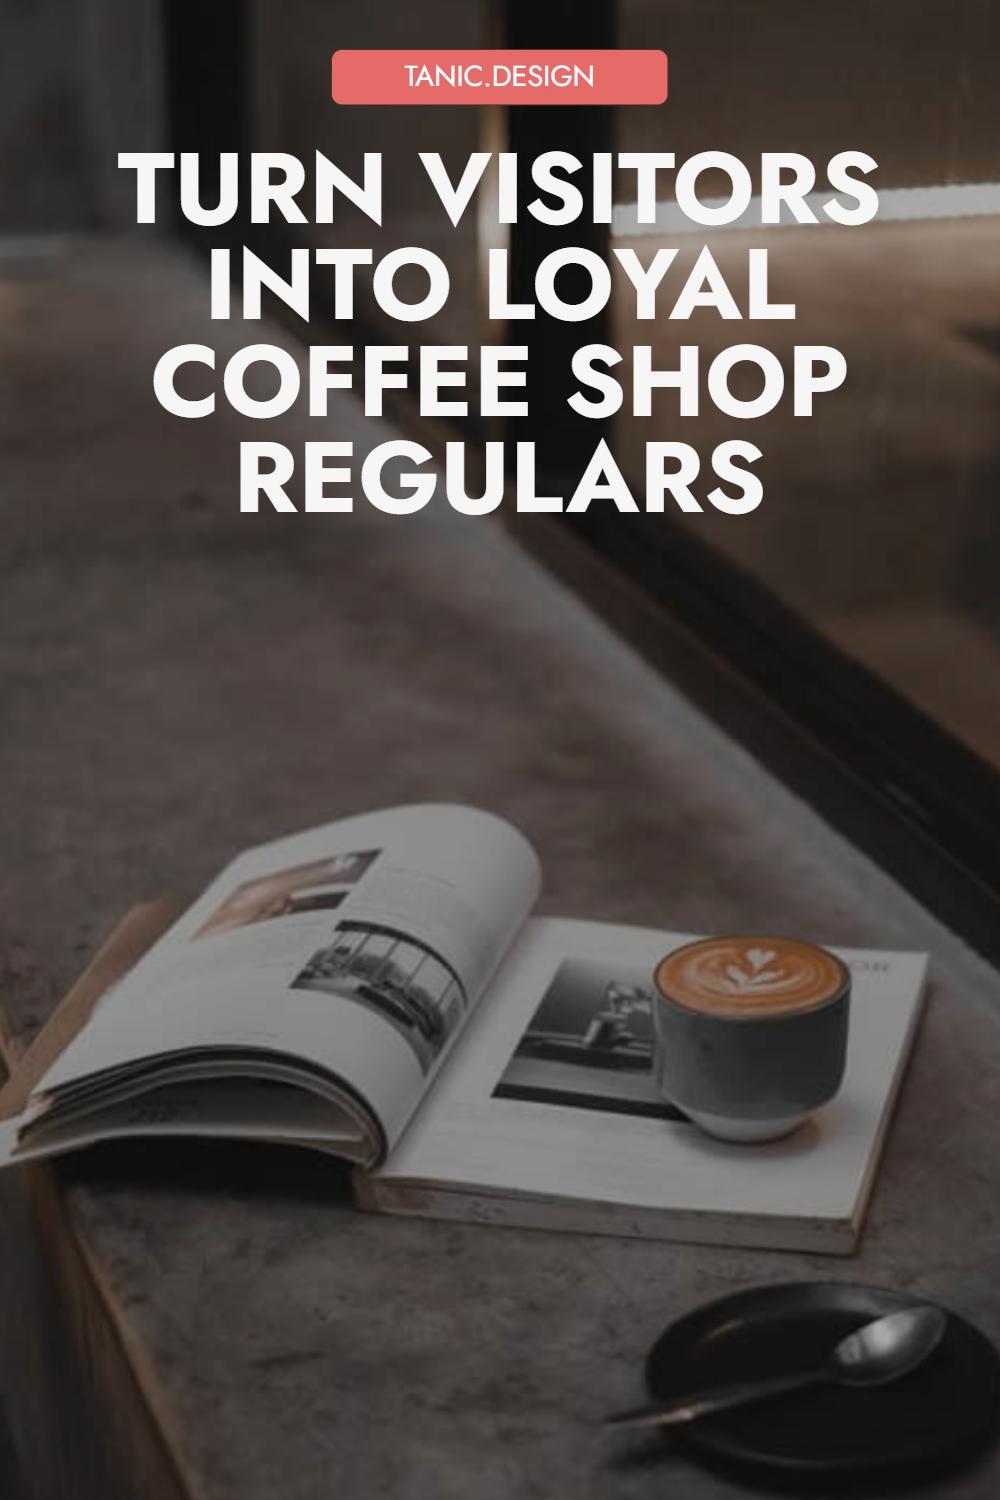 Nurture customer loyalty in coffee shops through welcoming interior design